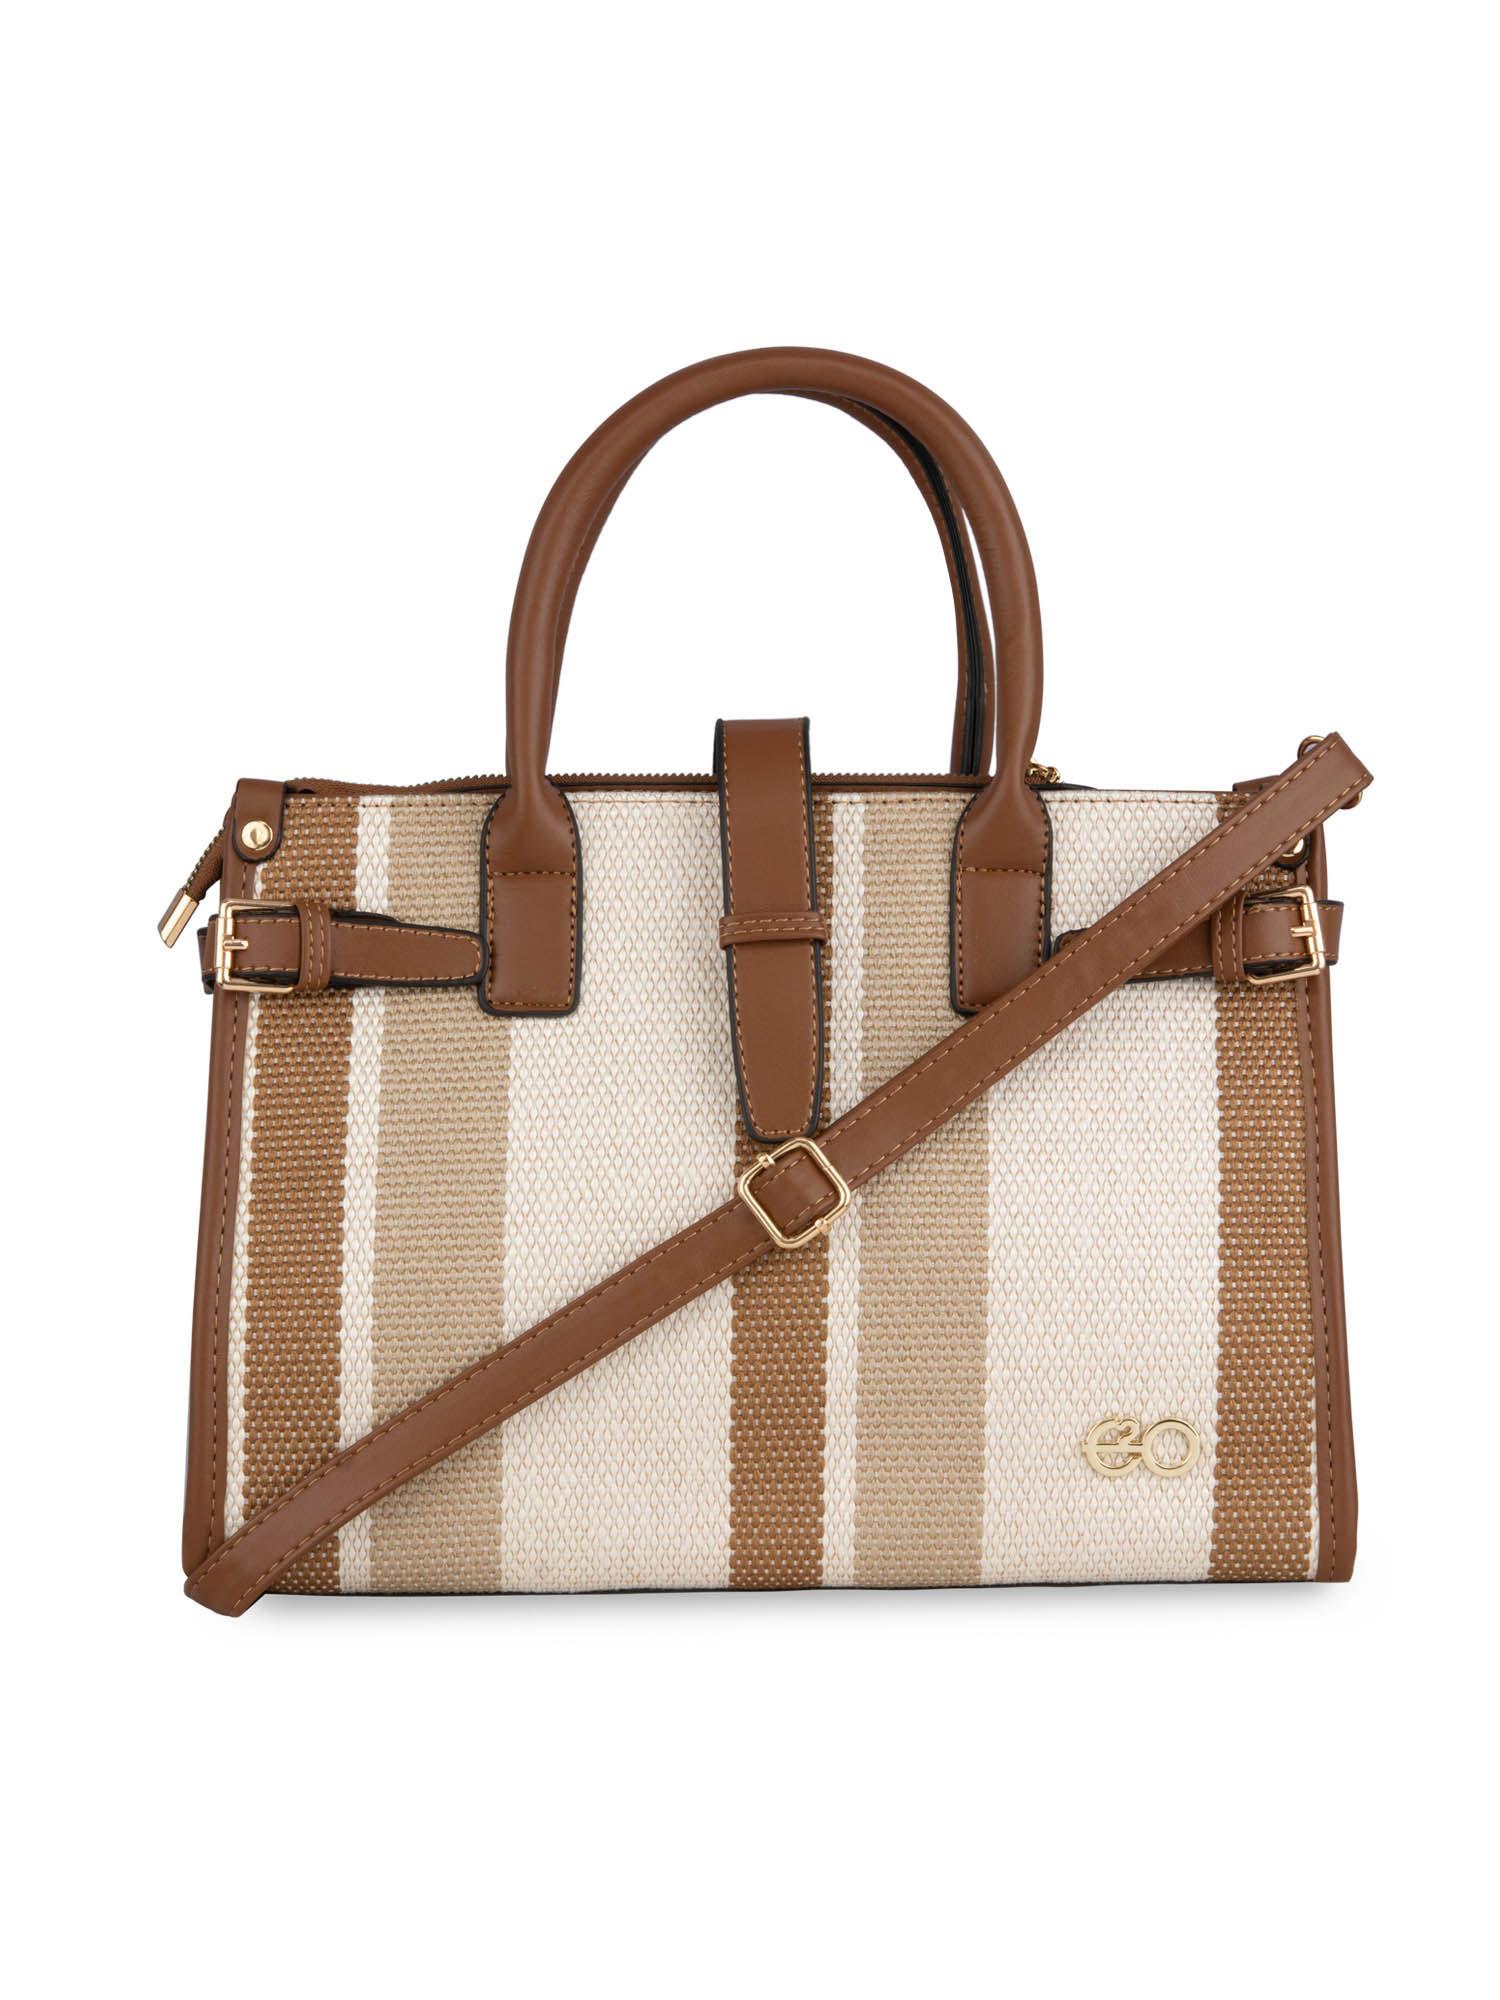 structured satchel for women - beige